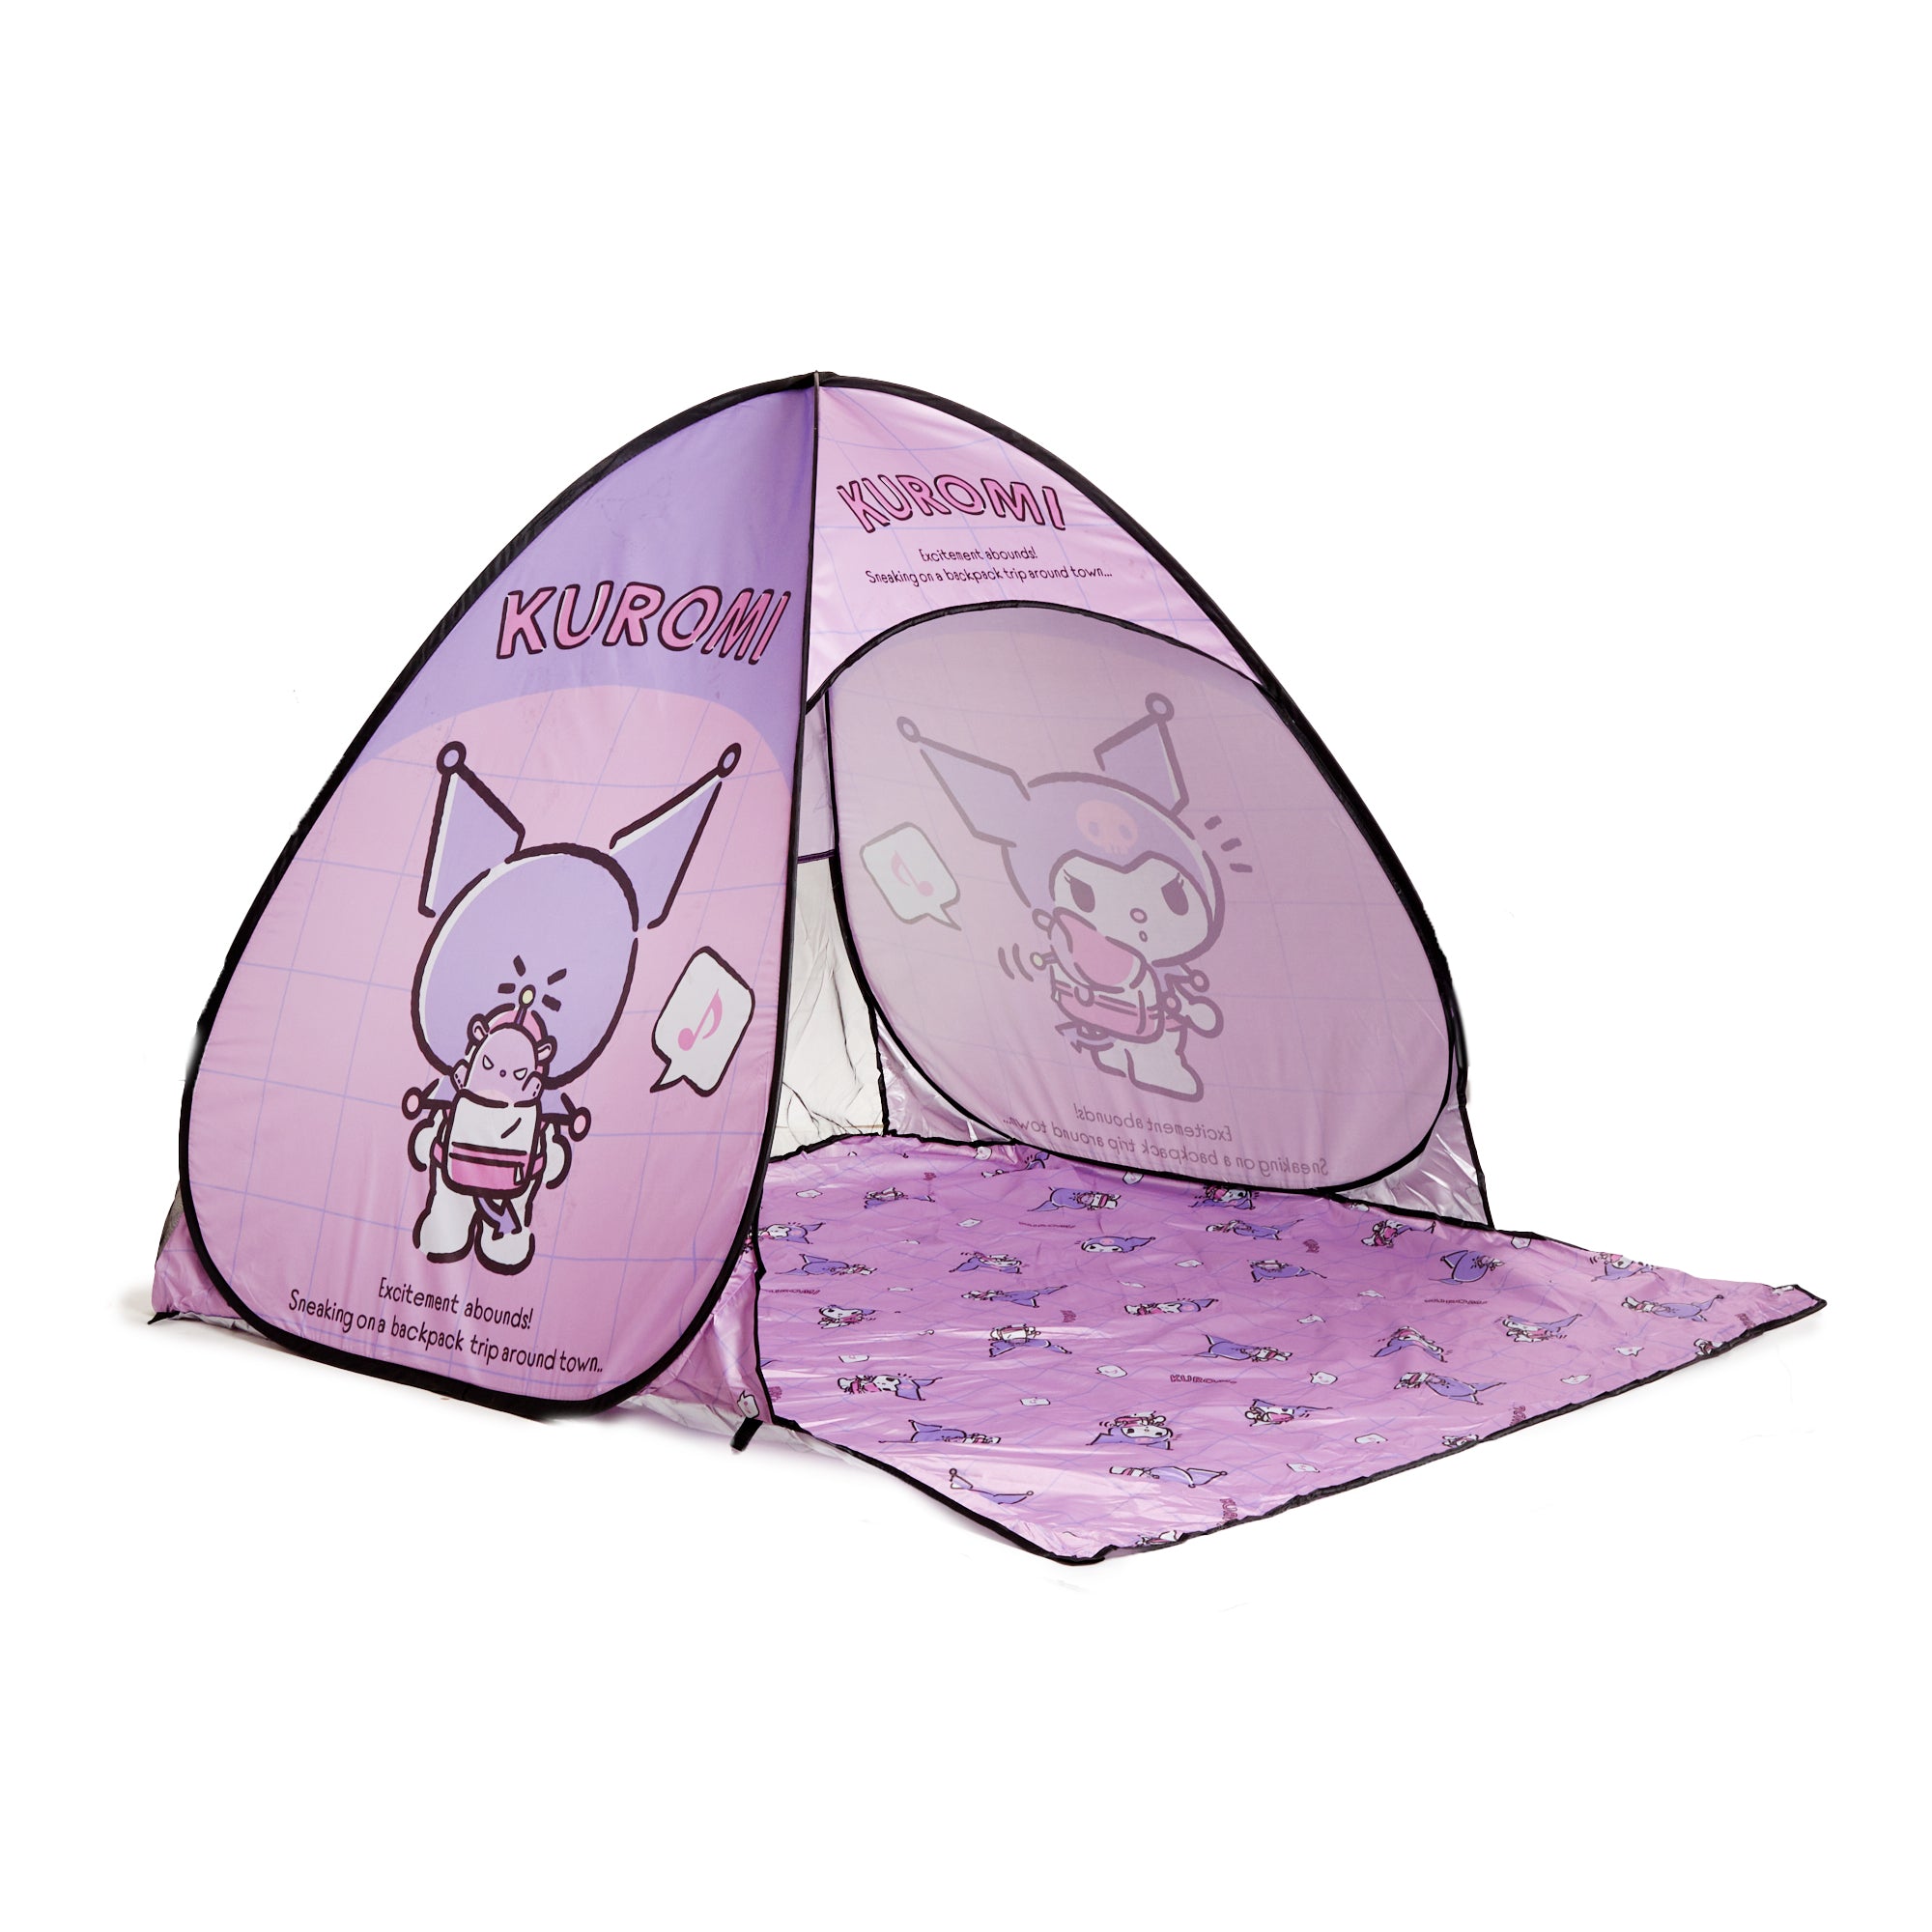 The Hello Kitty tent is sooo precious!!! 💞 : r/AnimalCrossing